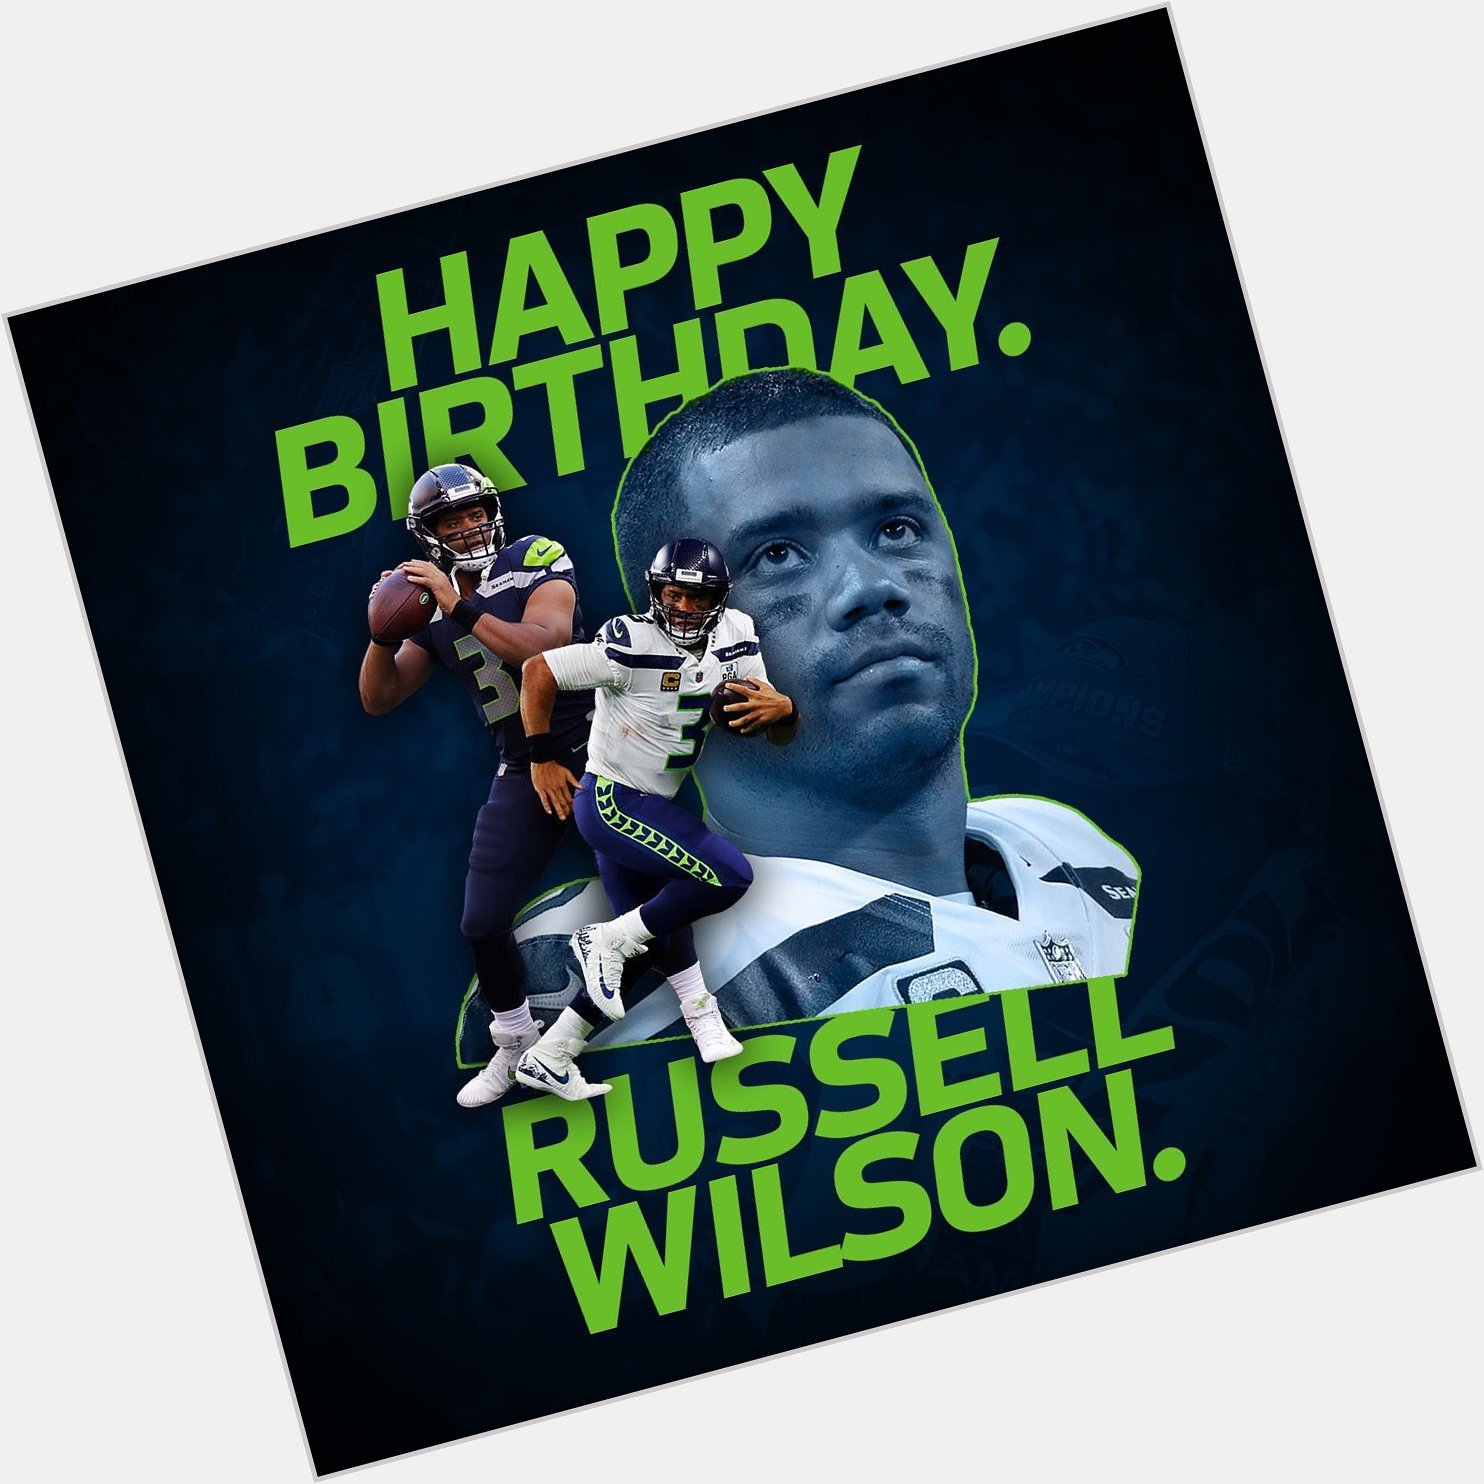 Happy Birthday Russell wilson...   